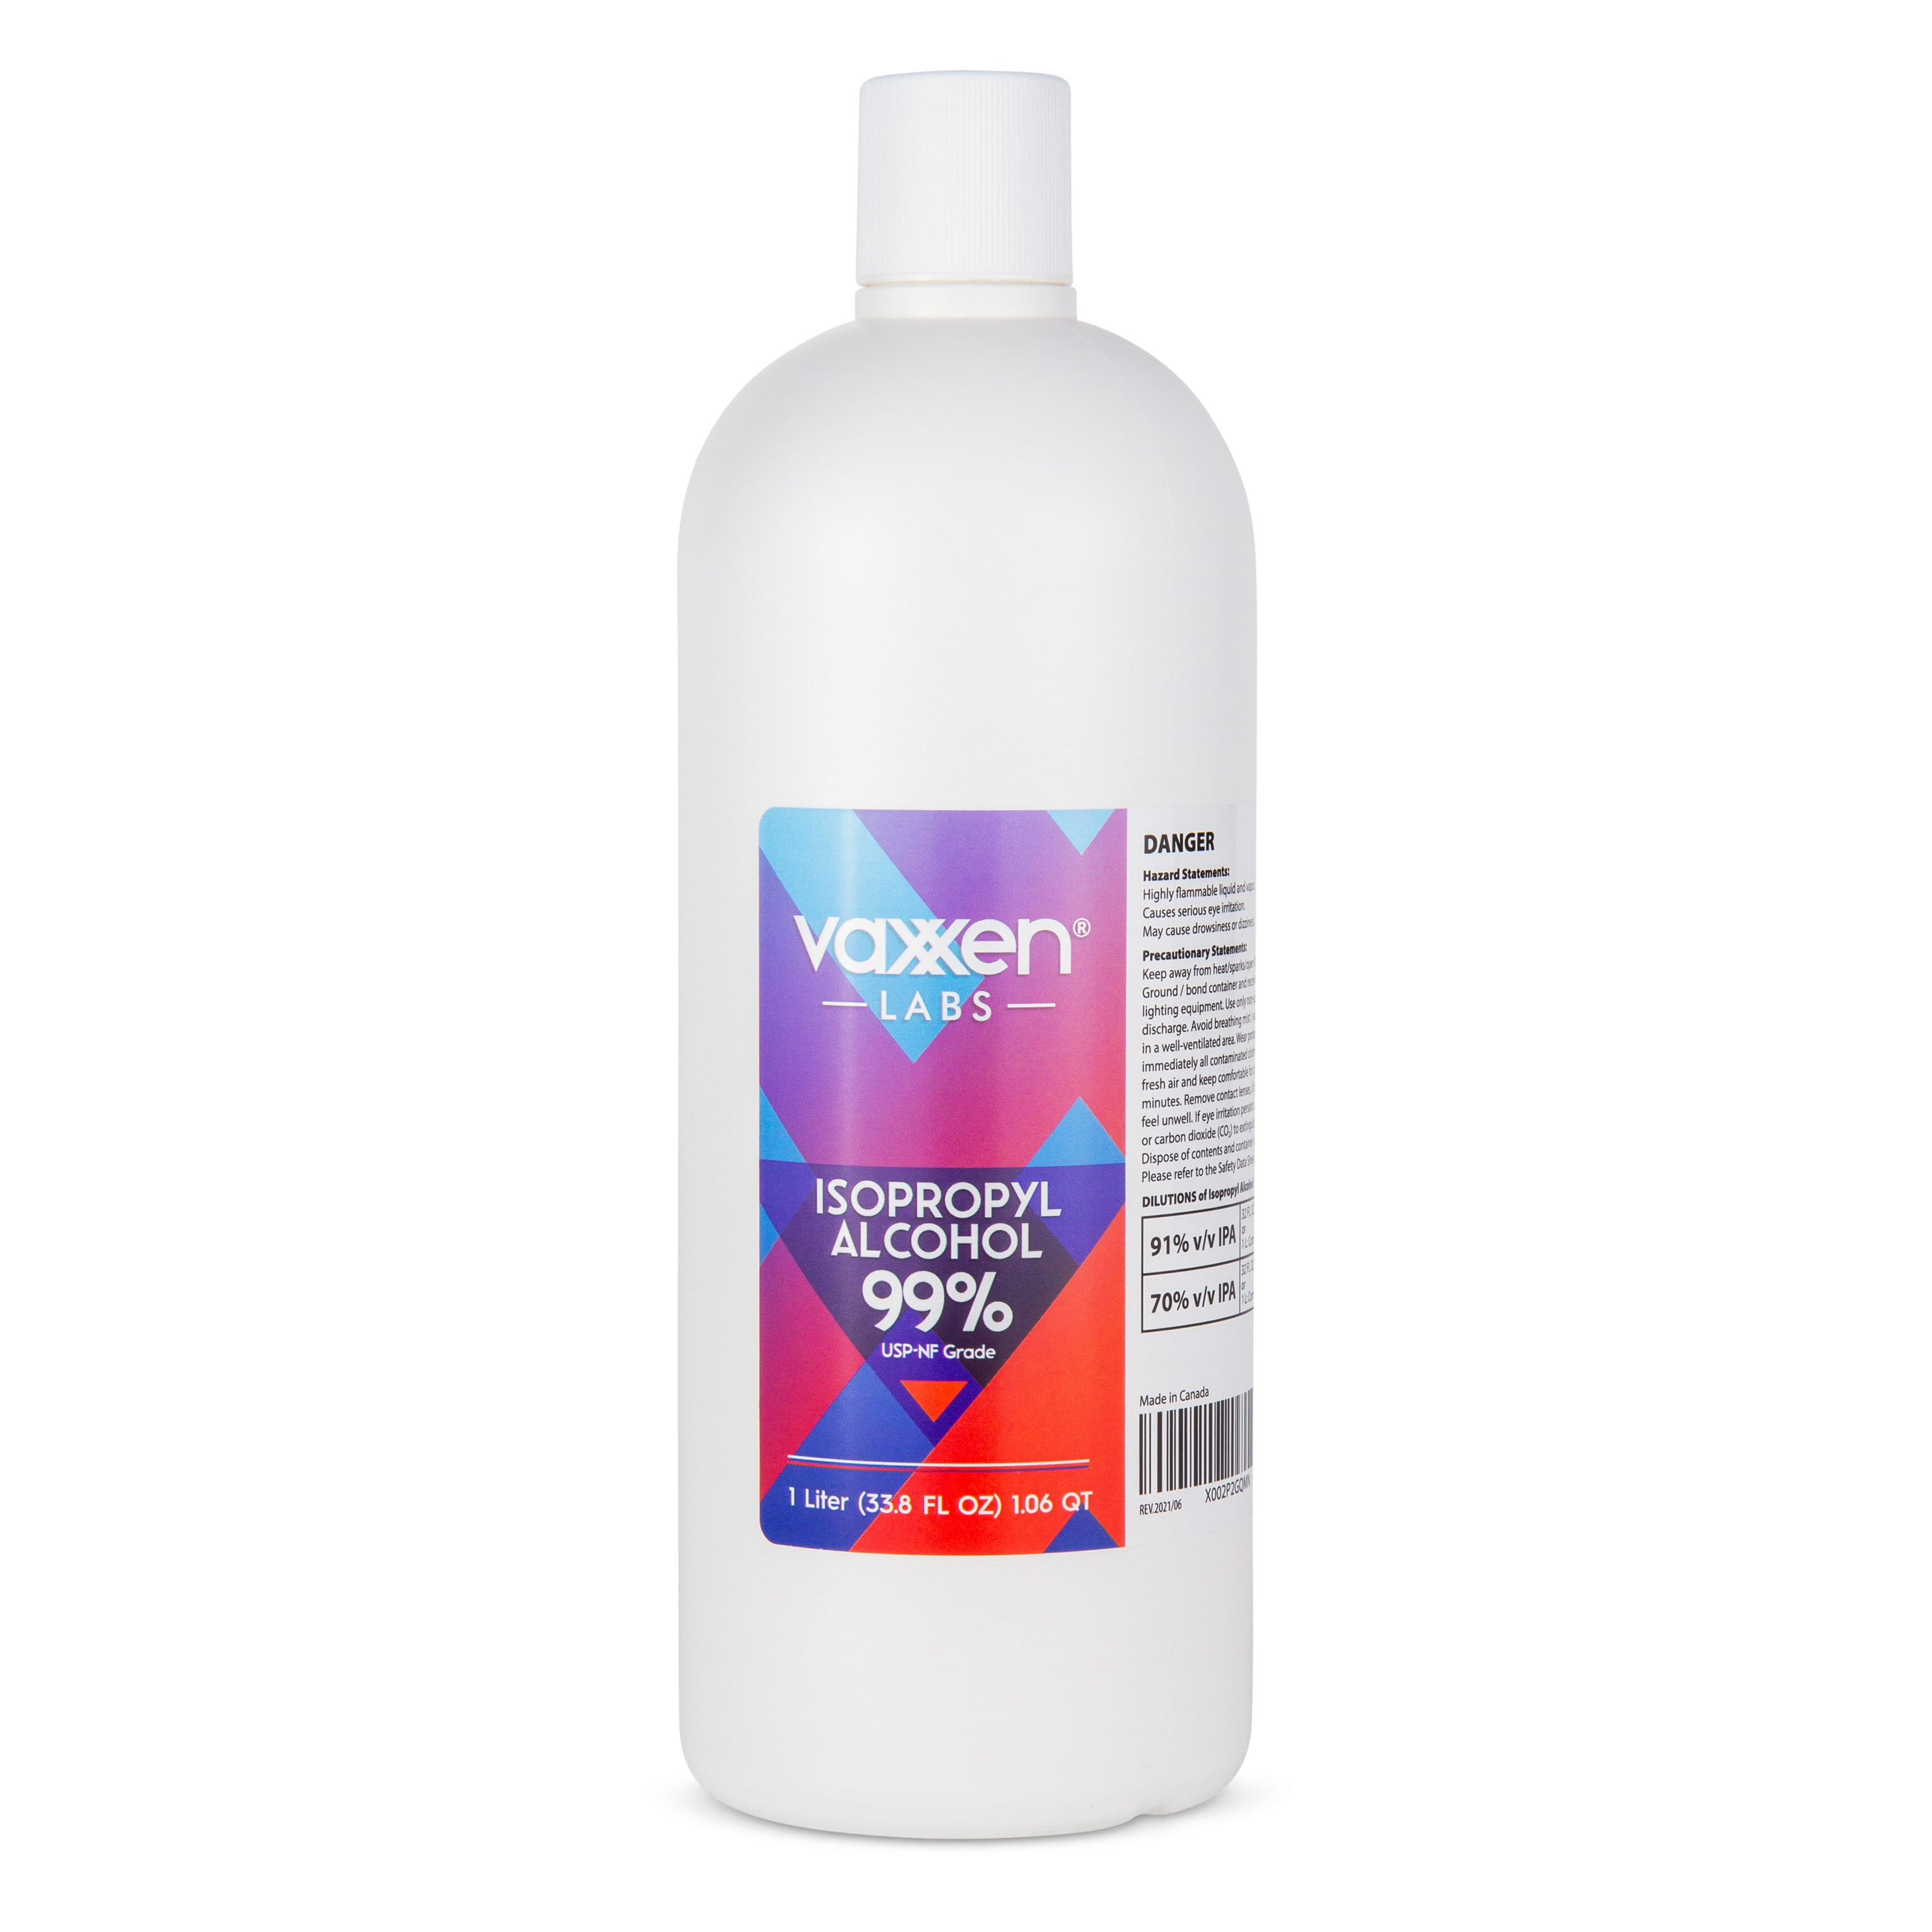 Sanitizer Spray with 99% Isopropyl Alcohol – SanJerScents, LLC